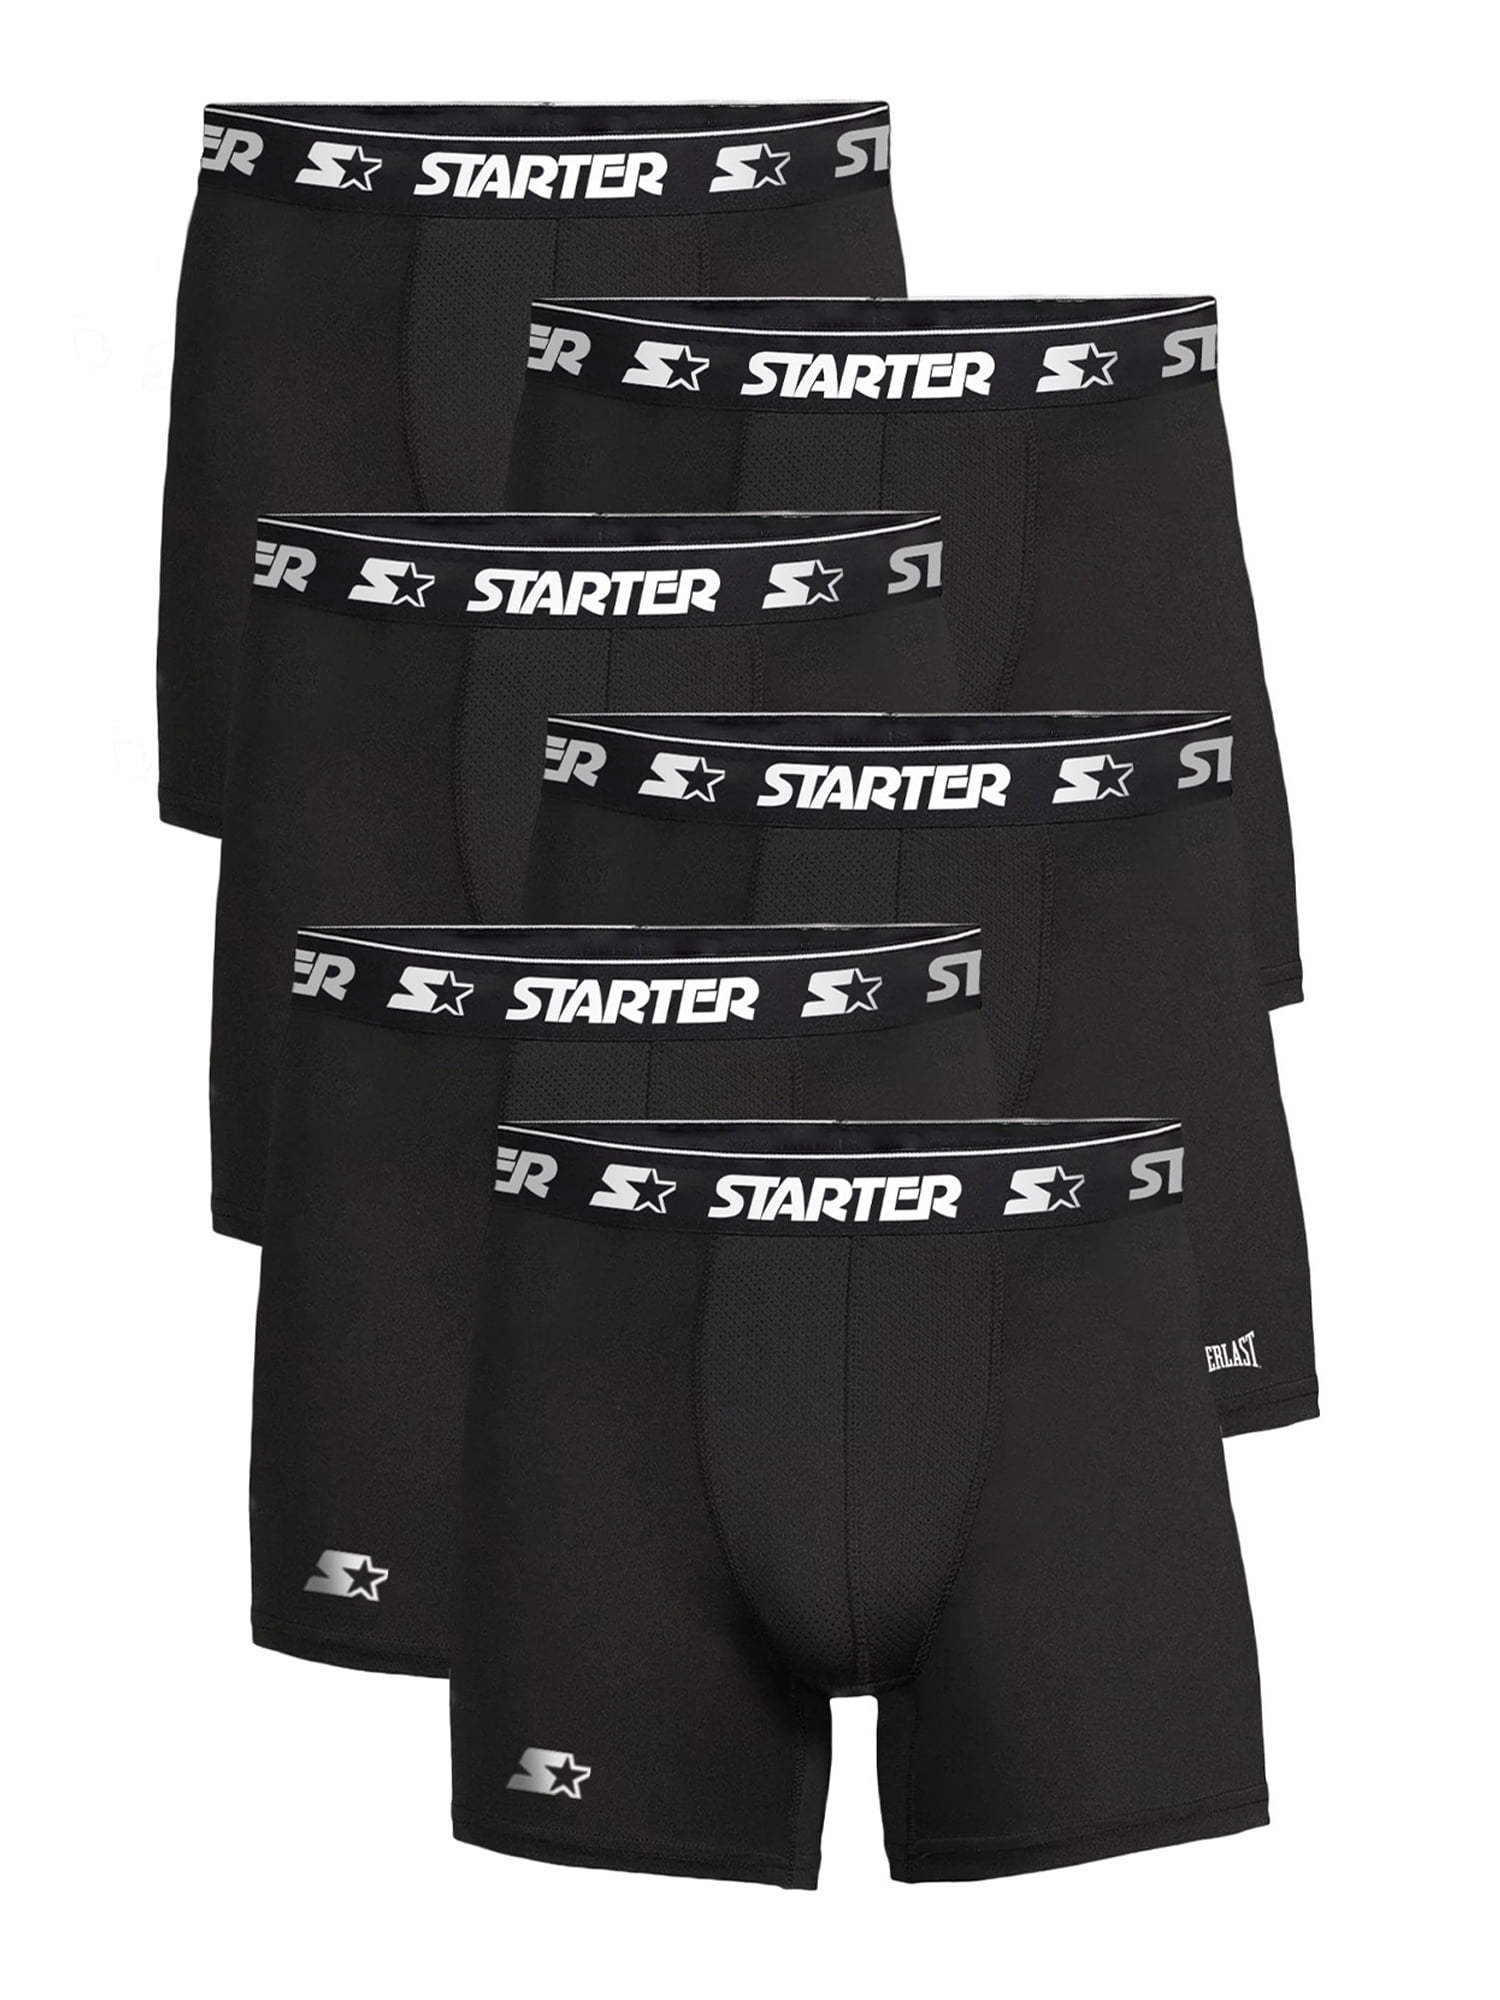 NBA Teams Mens Boxer Briefs - Sublimation Performance Active Underwear  Sizes 